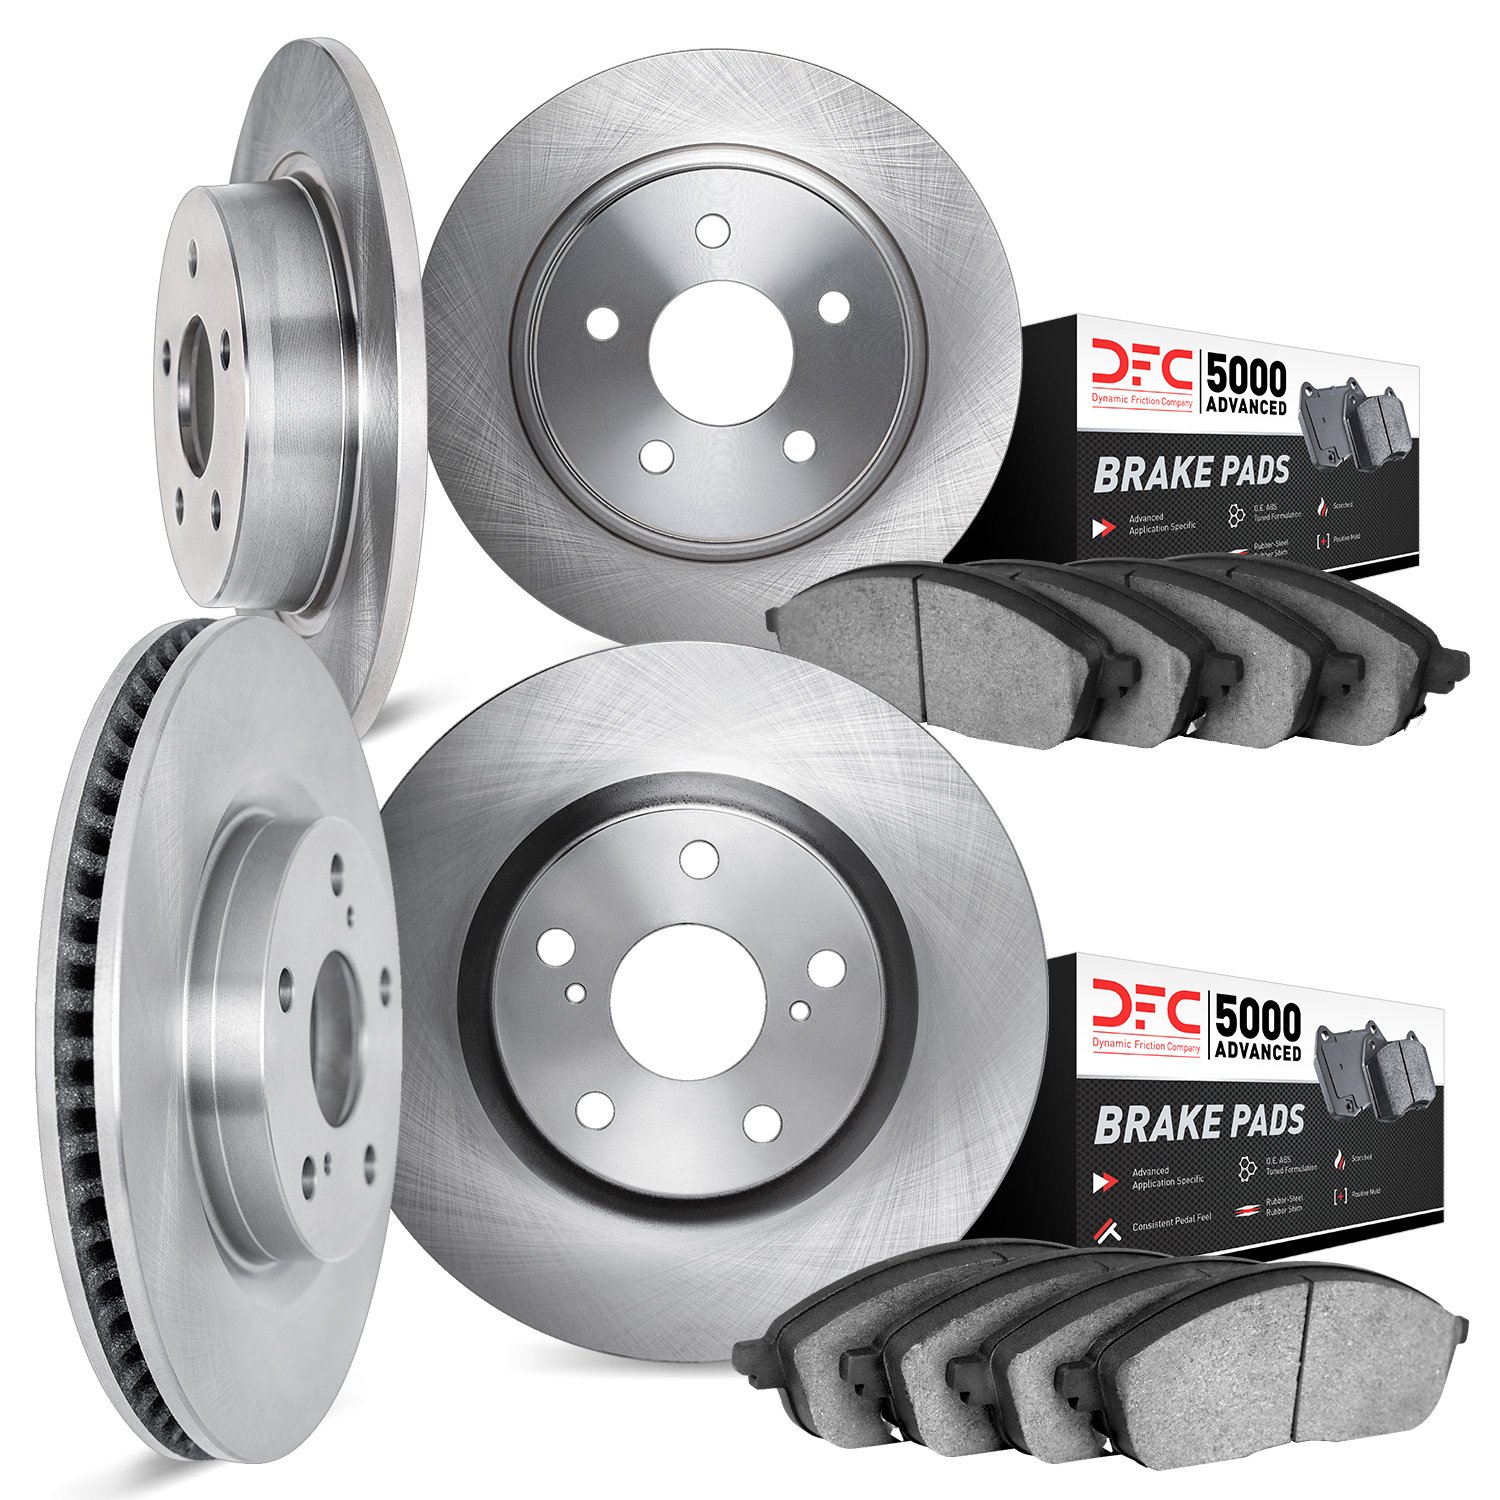 6504-67292 Brake Rotors w/5000 Advanced Brake Pads Kit, Fits Select Infiniti/Nissan, Position: Front and Rear